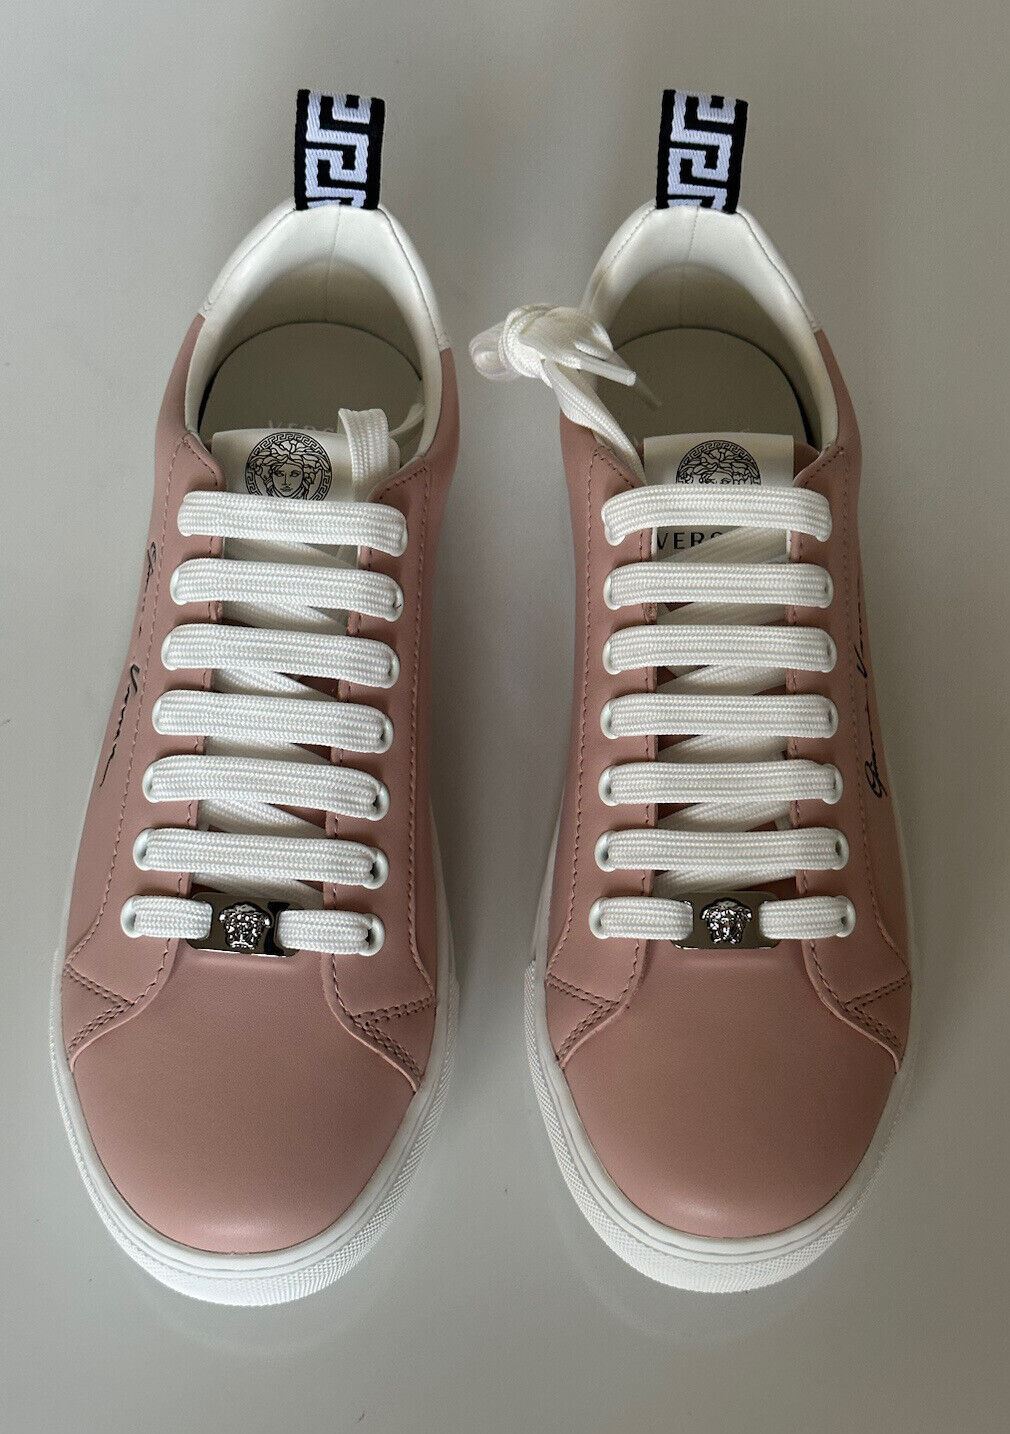 NIB $750 Versace Low Top Blush/White Leather Sneakers 9.5 US (39.5 Euro) 1002773